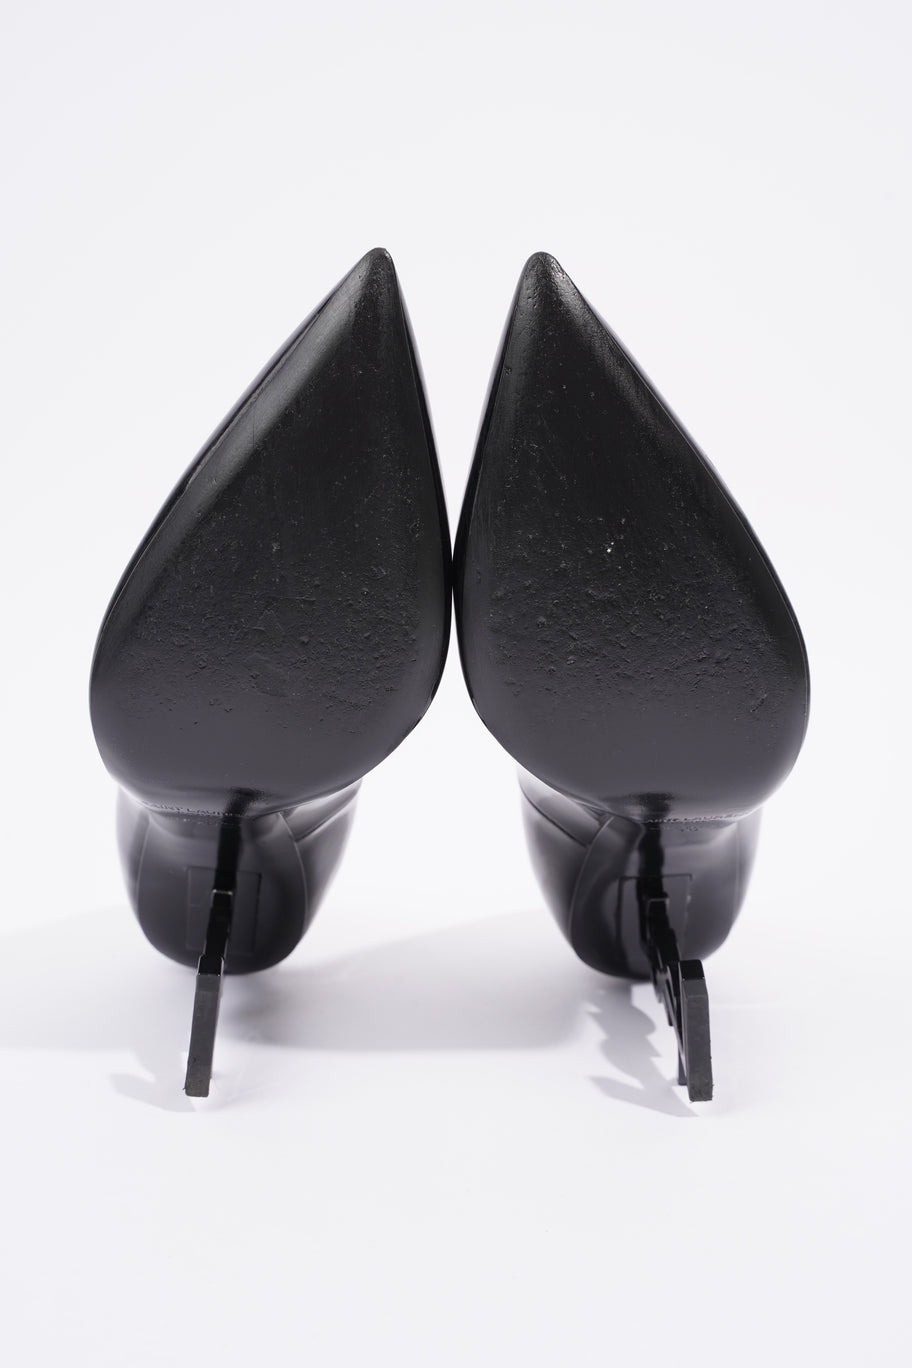 Opyum Heels 110 Black Patent Leather EU 40 UK 7 Image 7